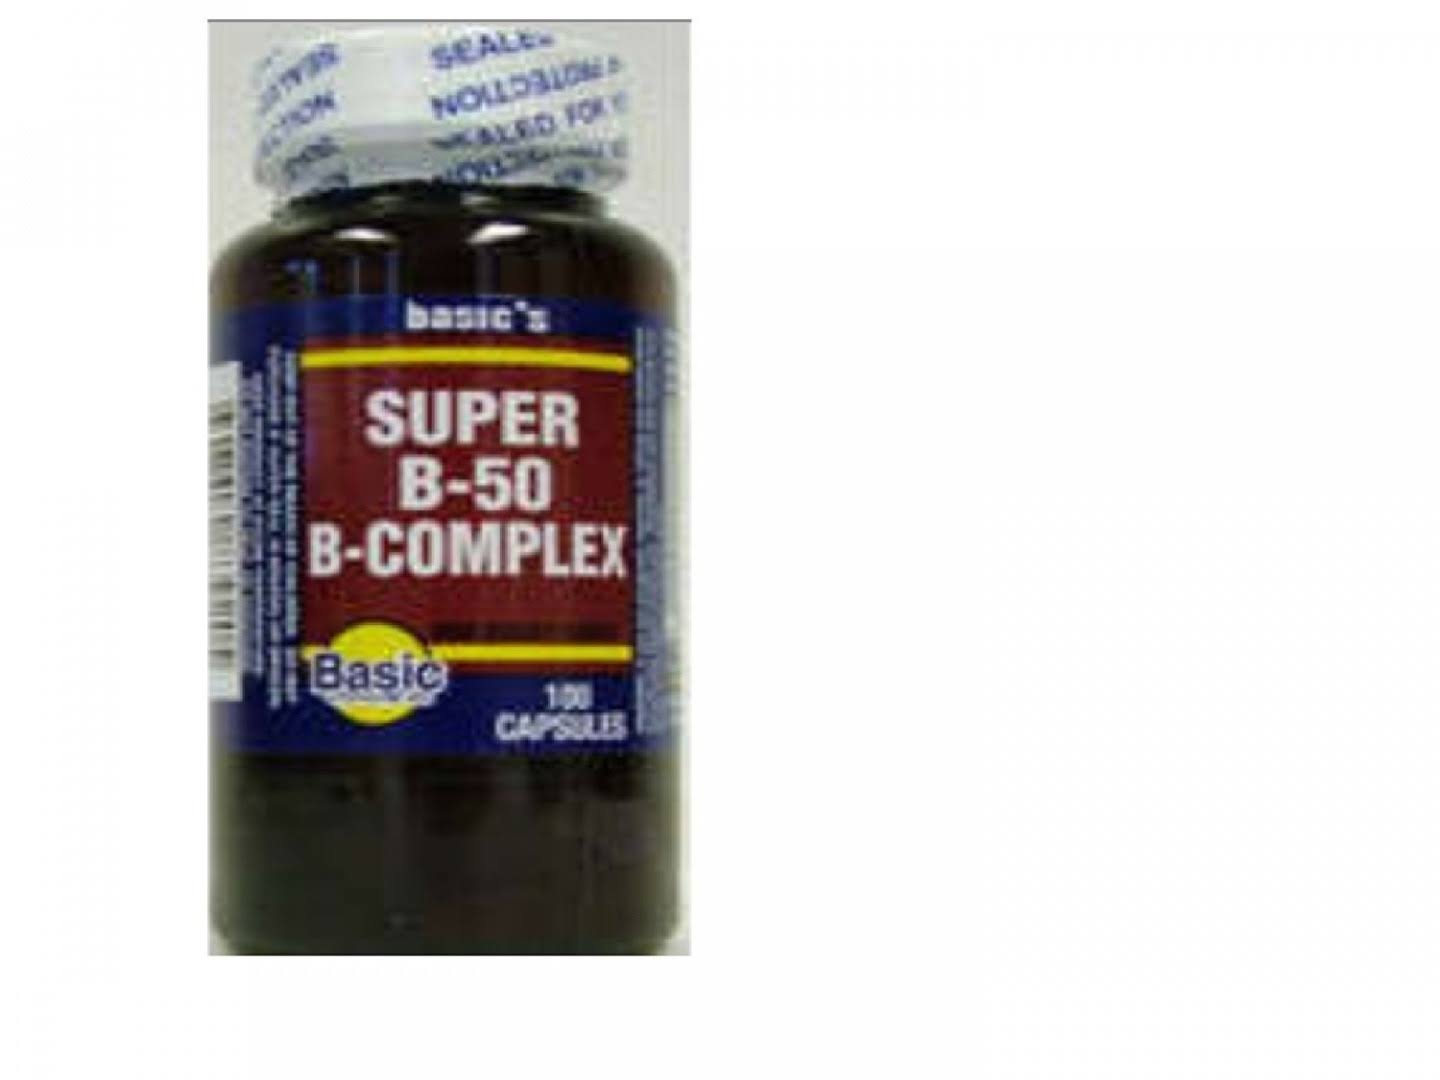 Basic's Super B 50 B Complex Capsules Vitamins - 100ct